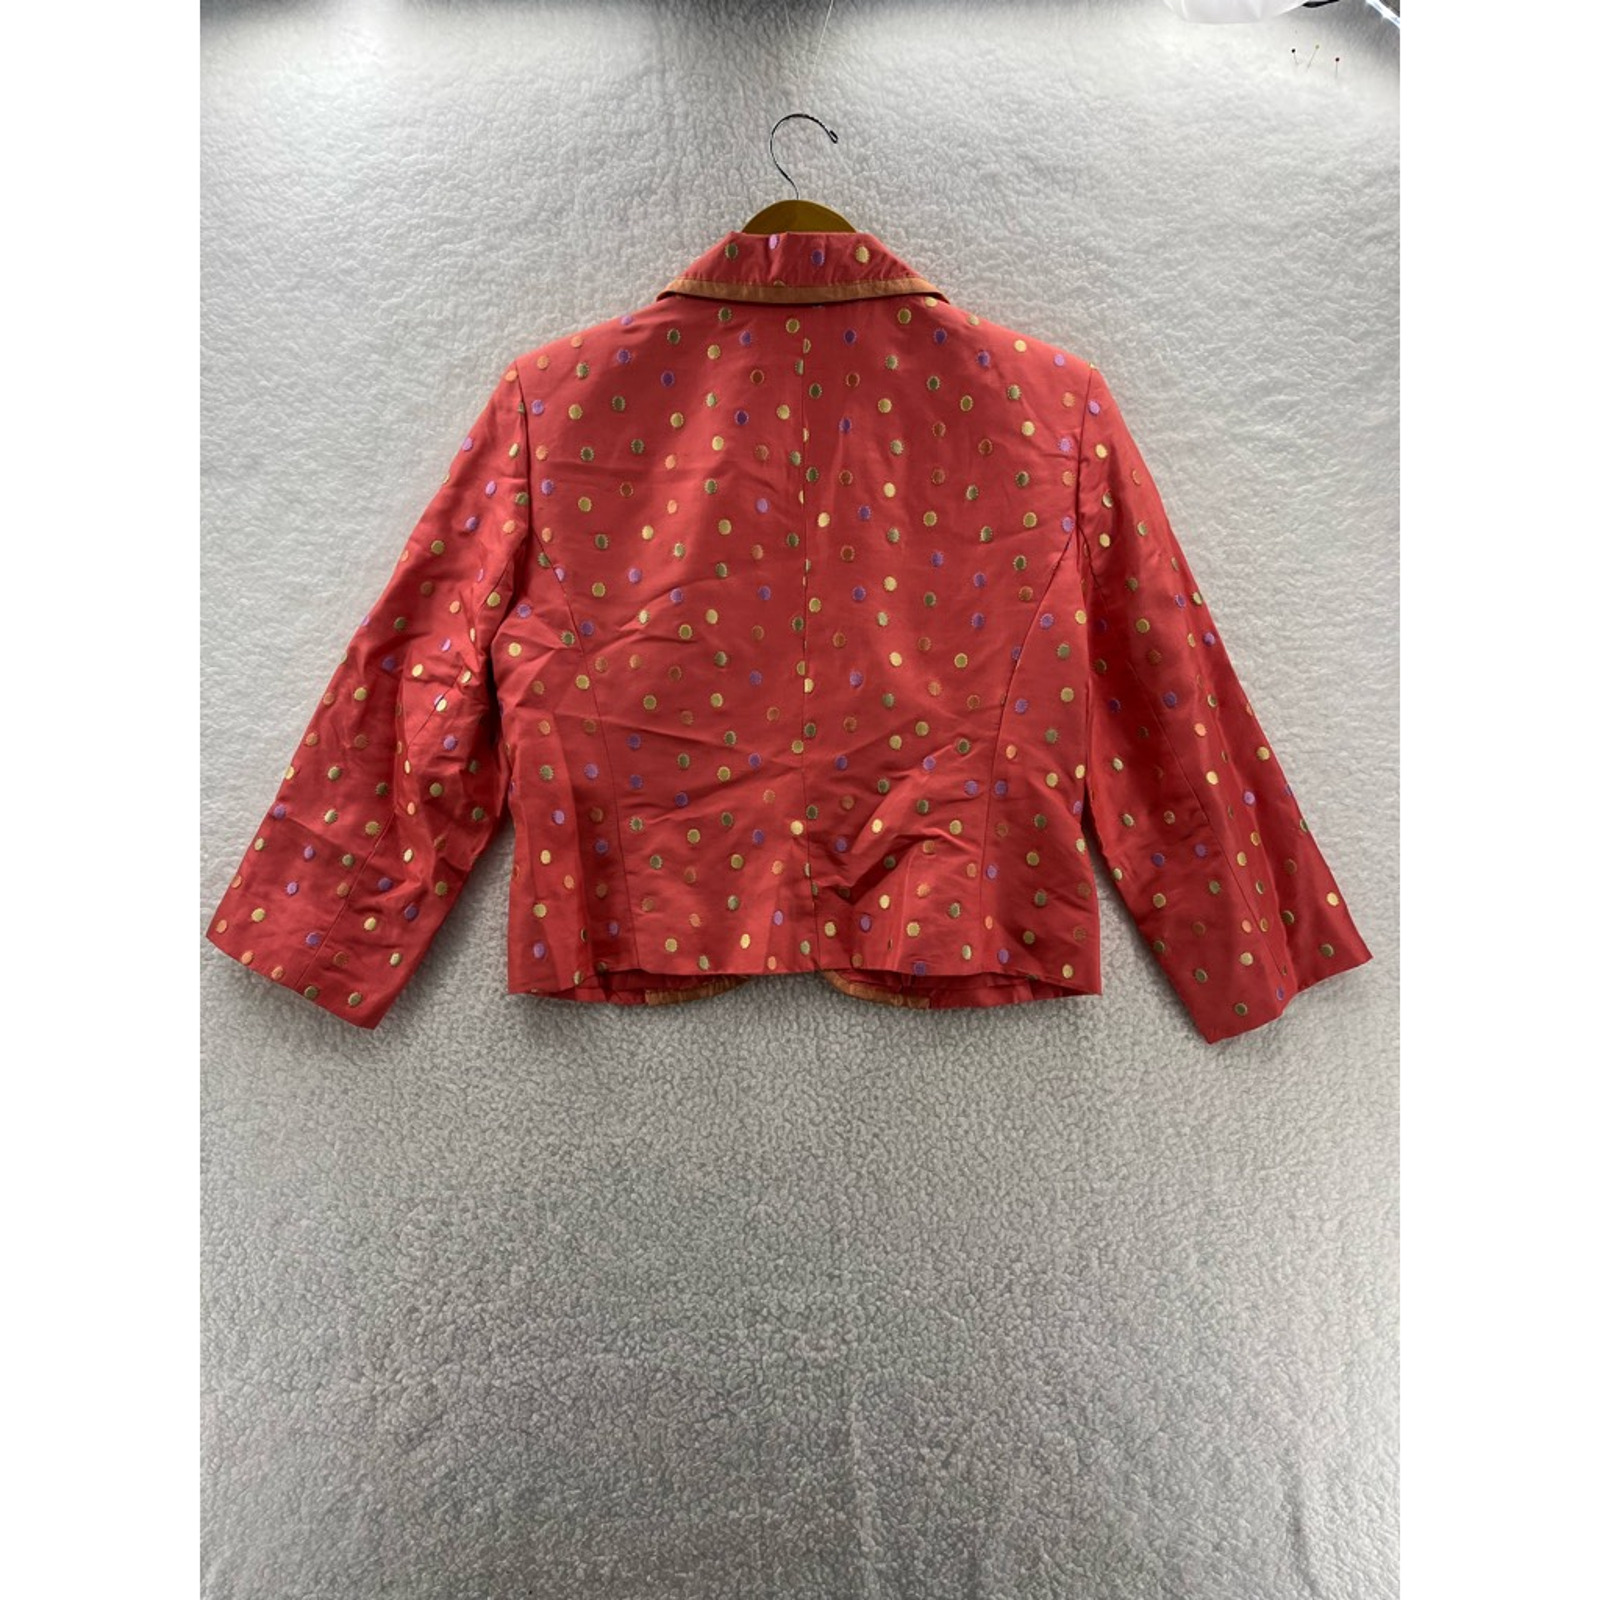 Transitions Womens Blazer Jacket Red Polka Dot Wa… - image 2